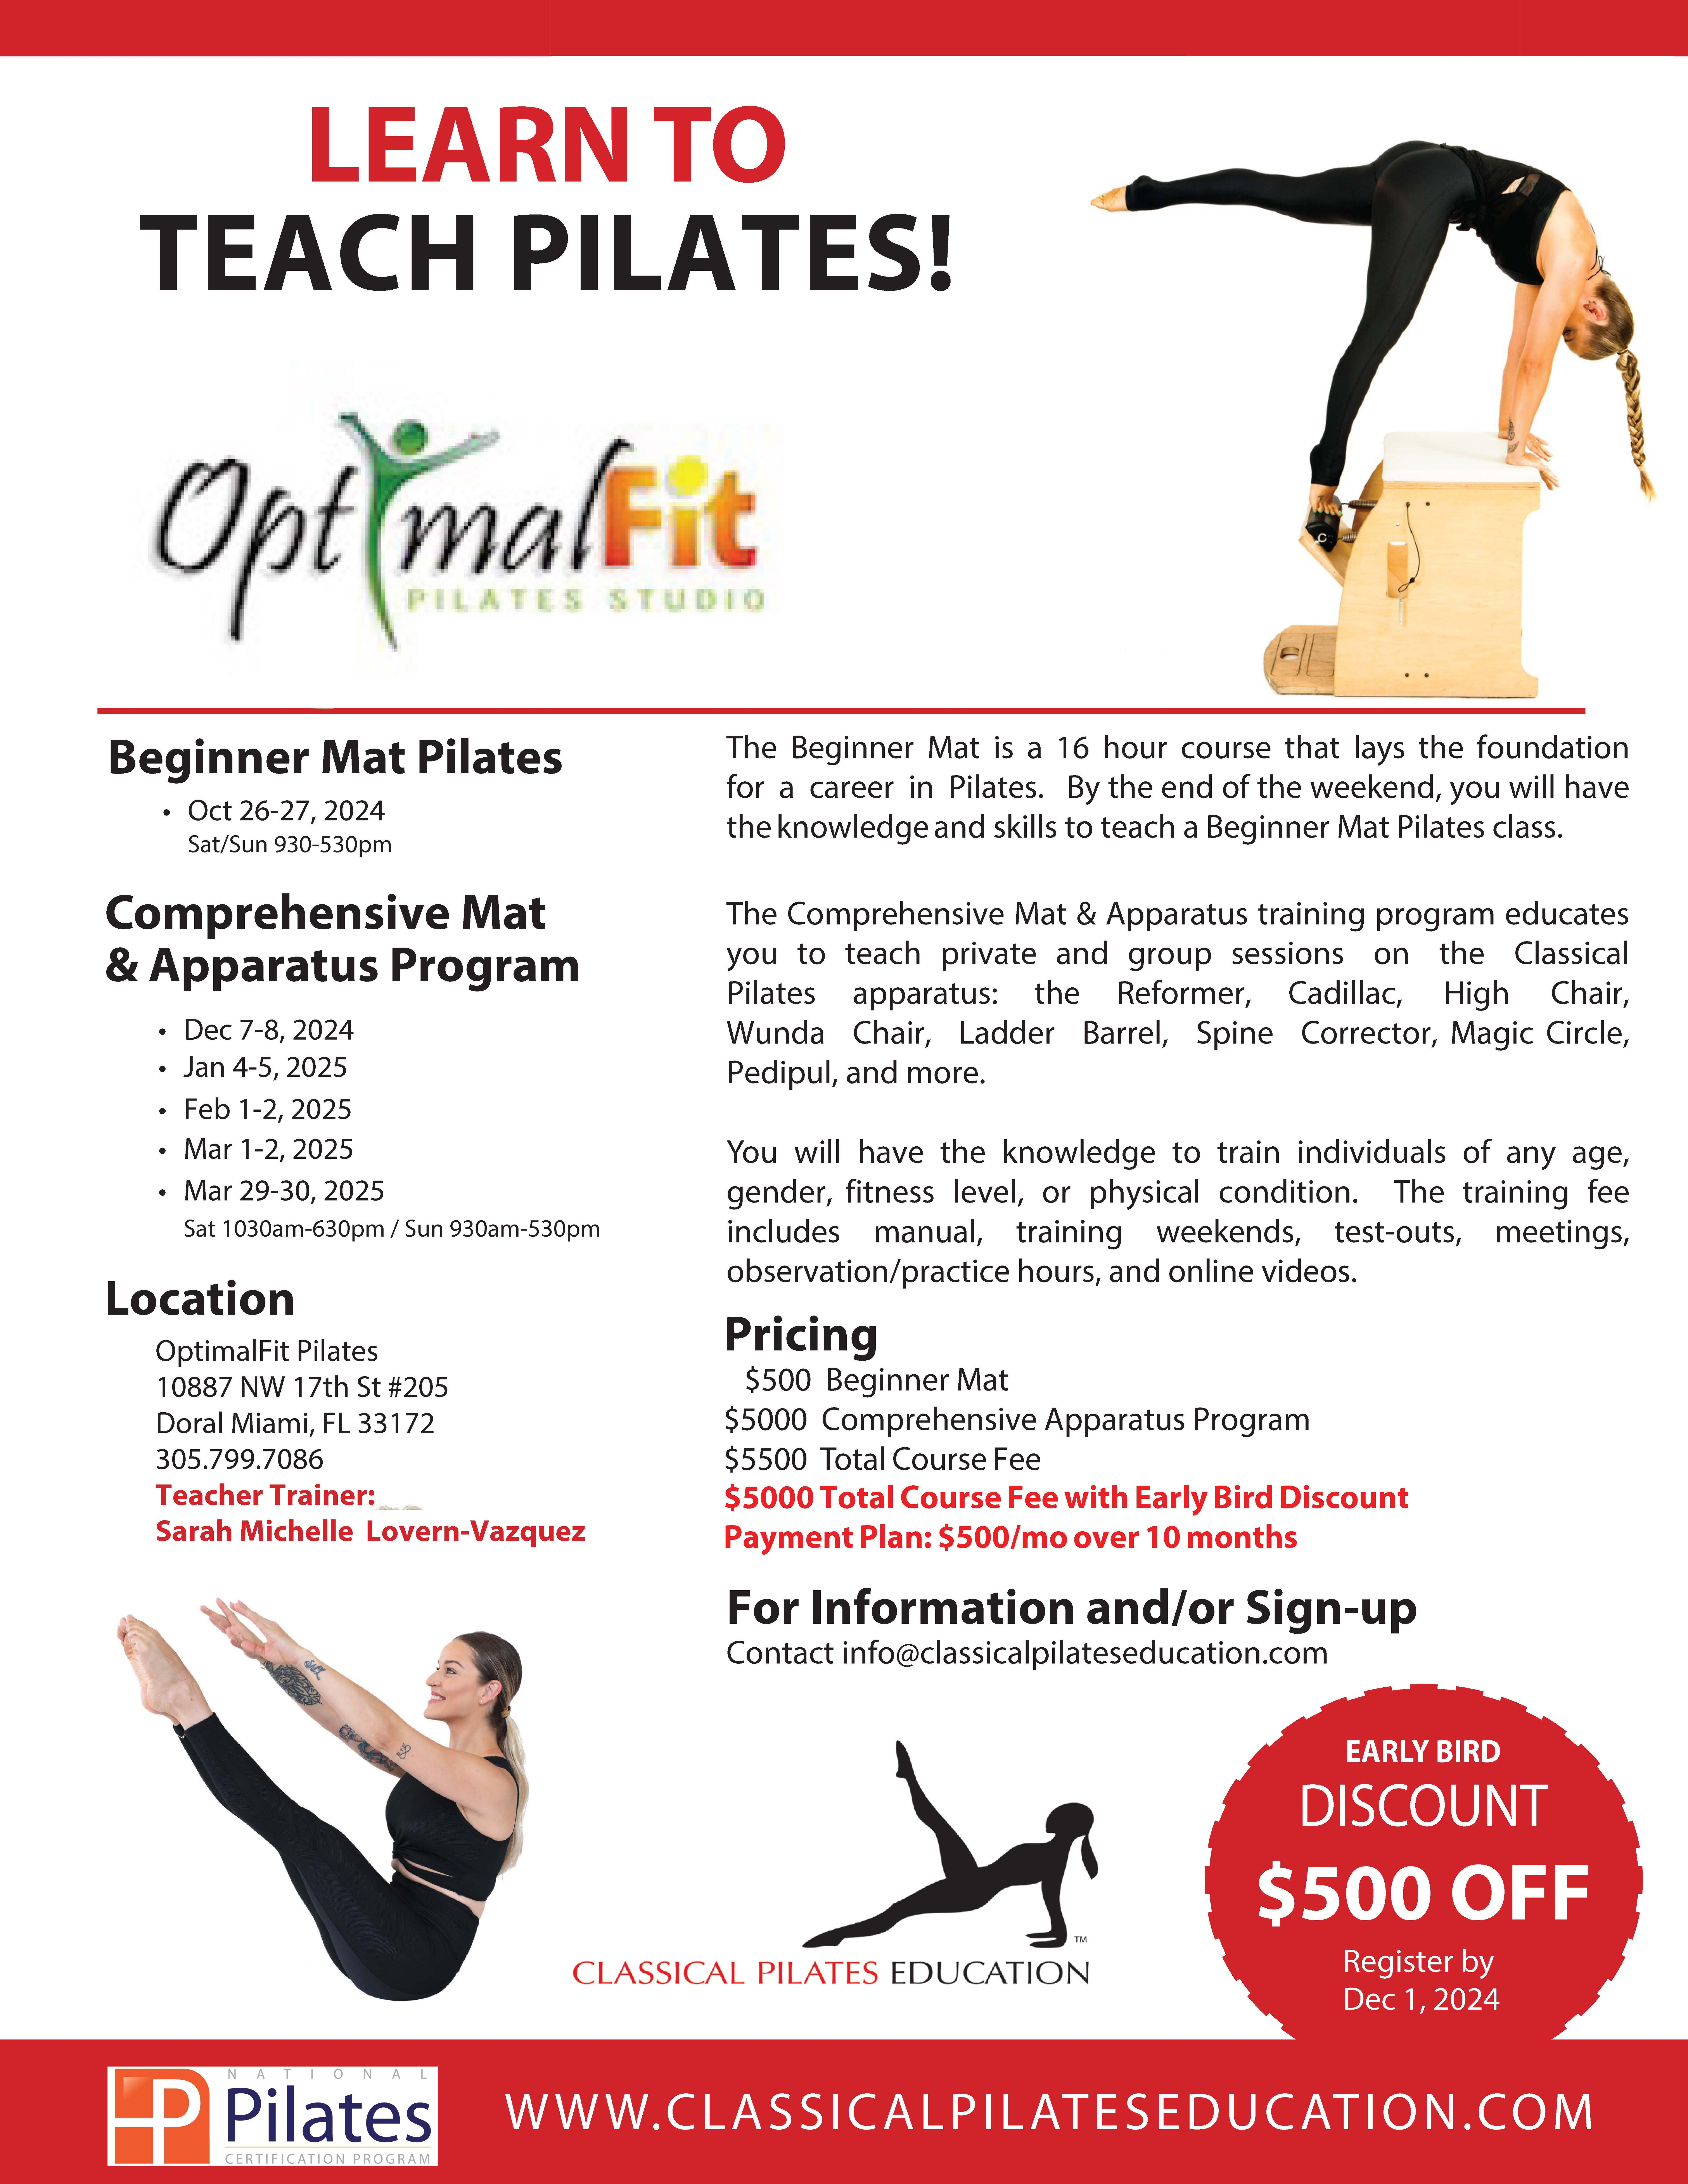 OptimalFit Pilates Doral, FL​